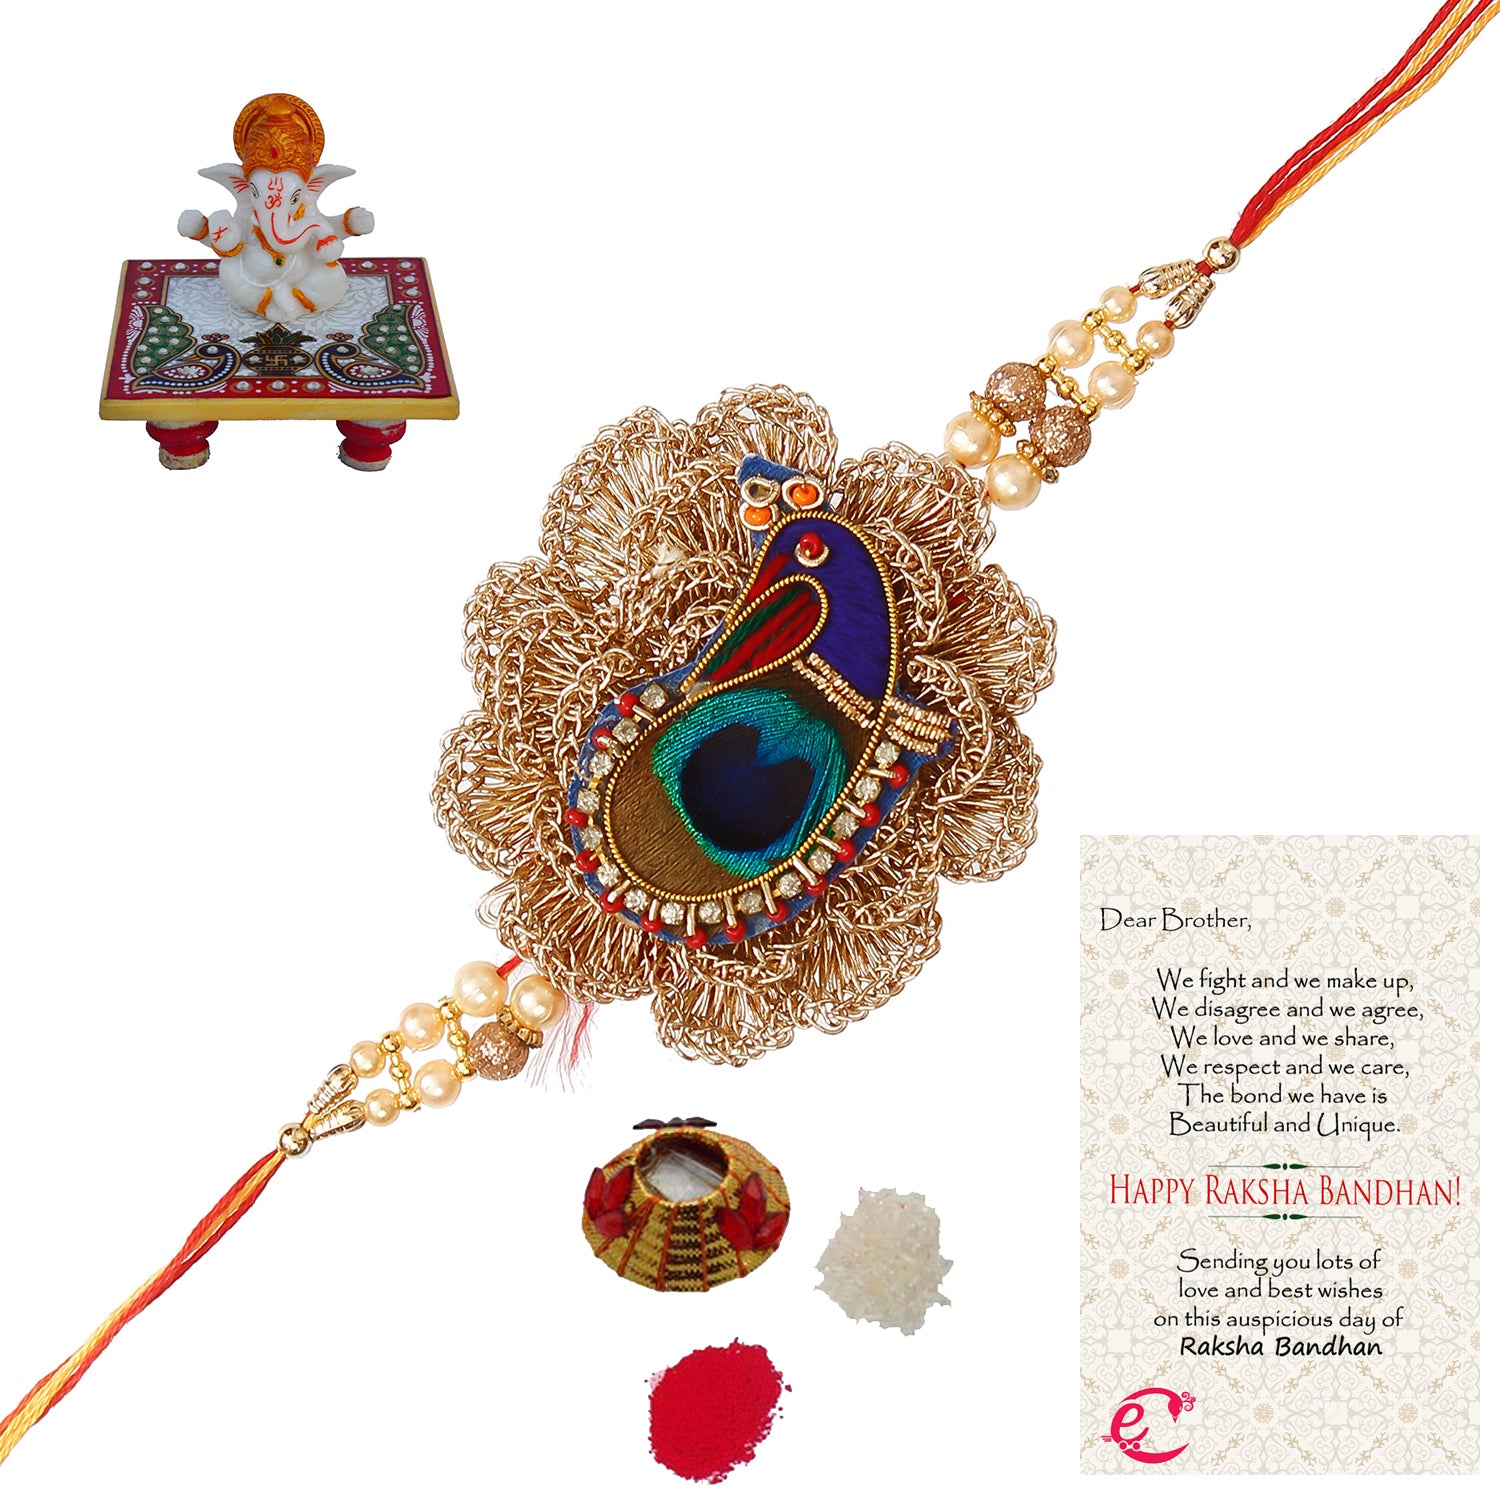 Designer Peacock Rakhi with Lord Ganesha Marble Chowki and Roli Tikka Matki, Best Wishes Greeting Card